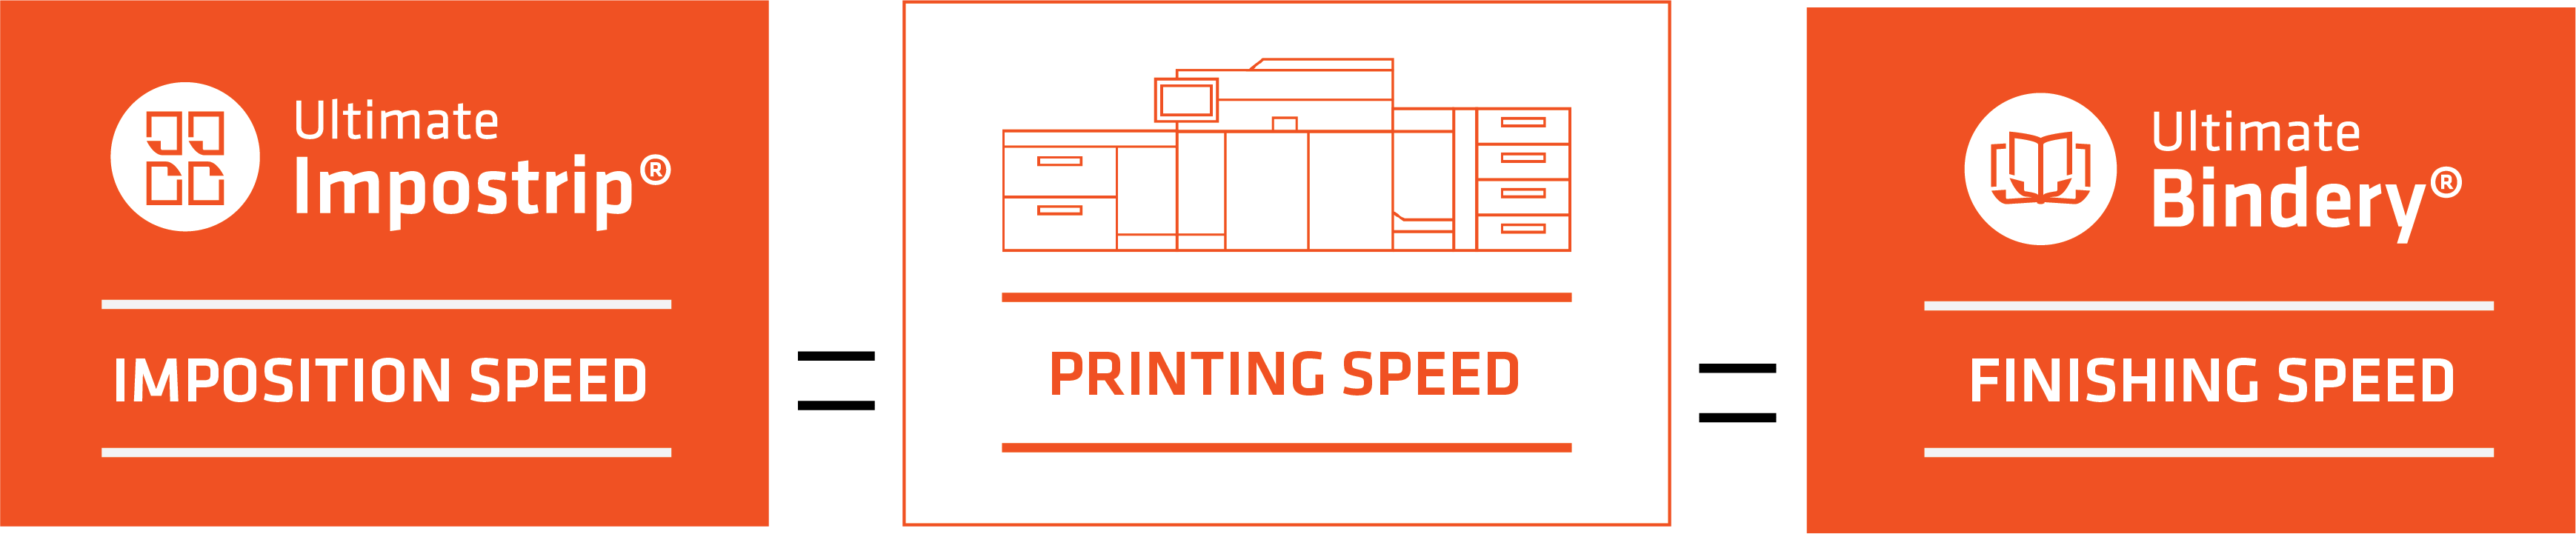 Imposition_Printing_Finishing_Speed_Equation_Automation